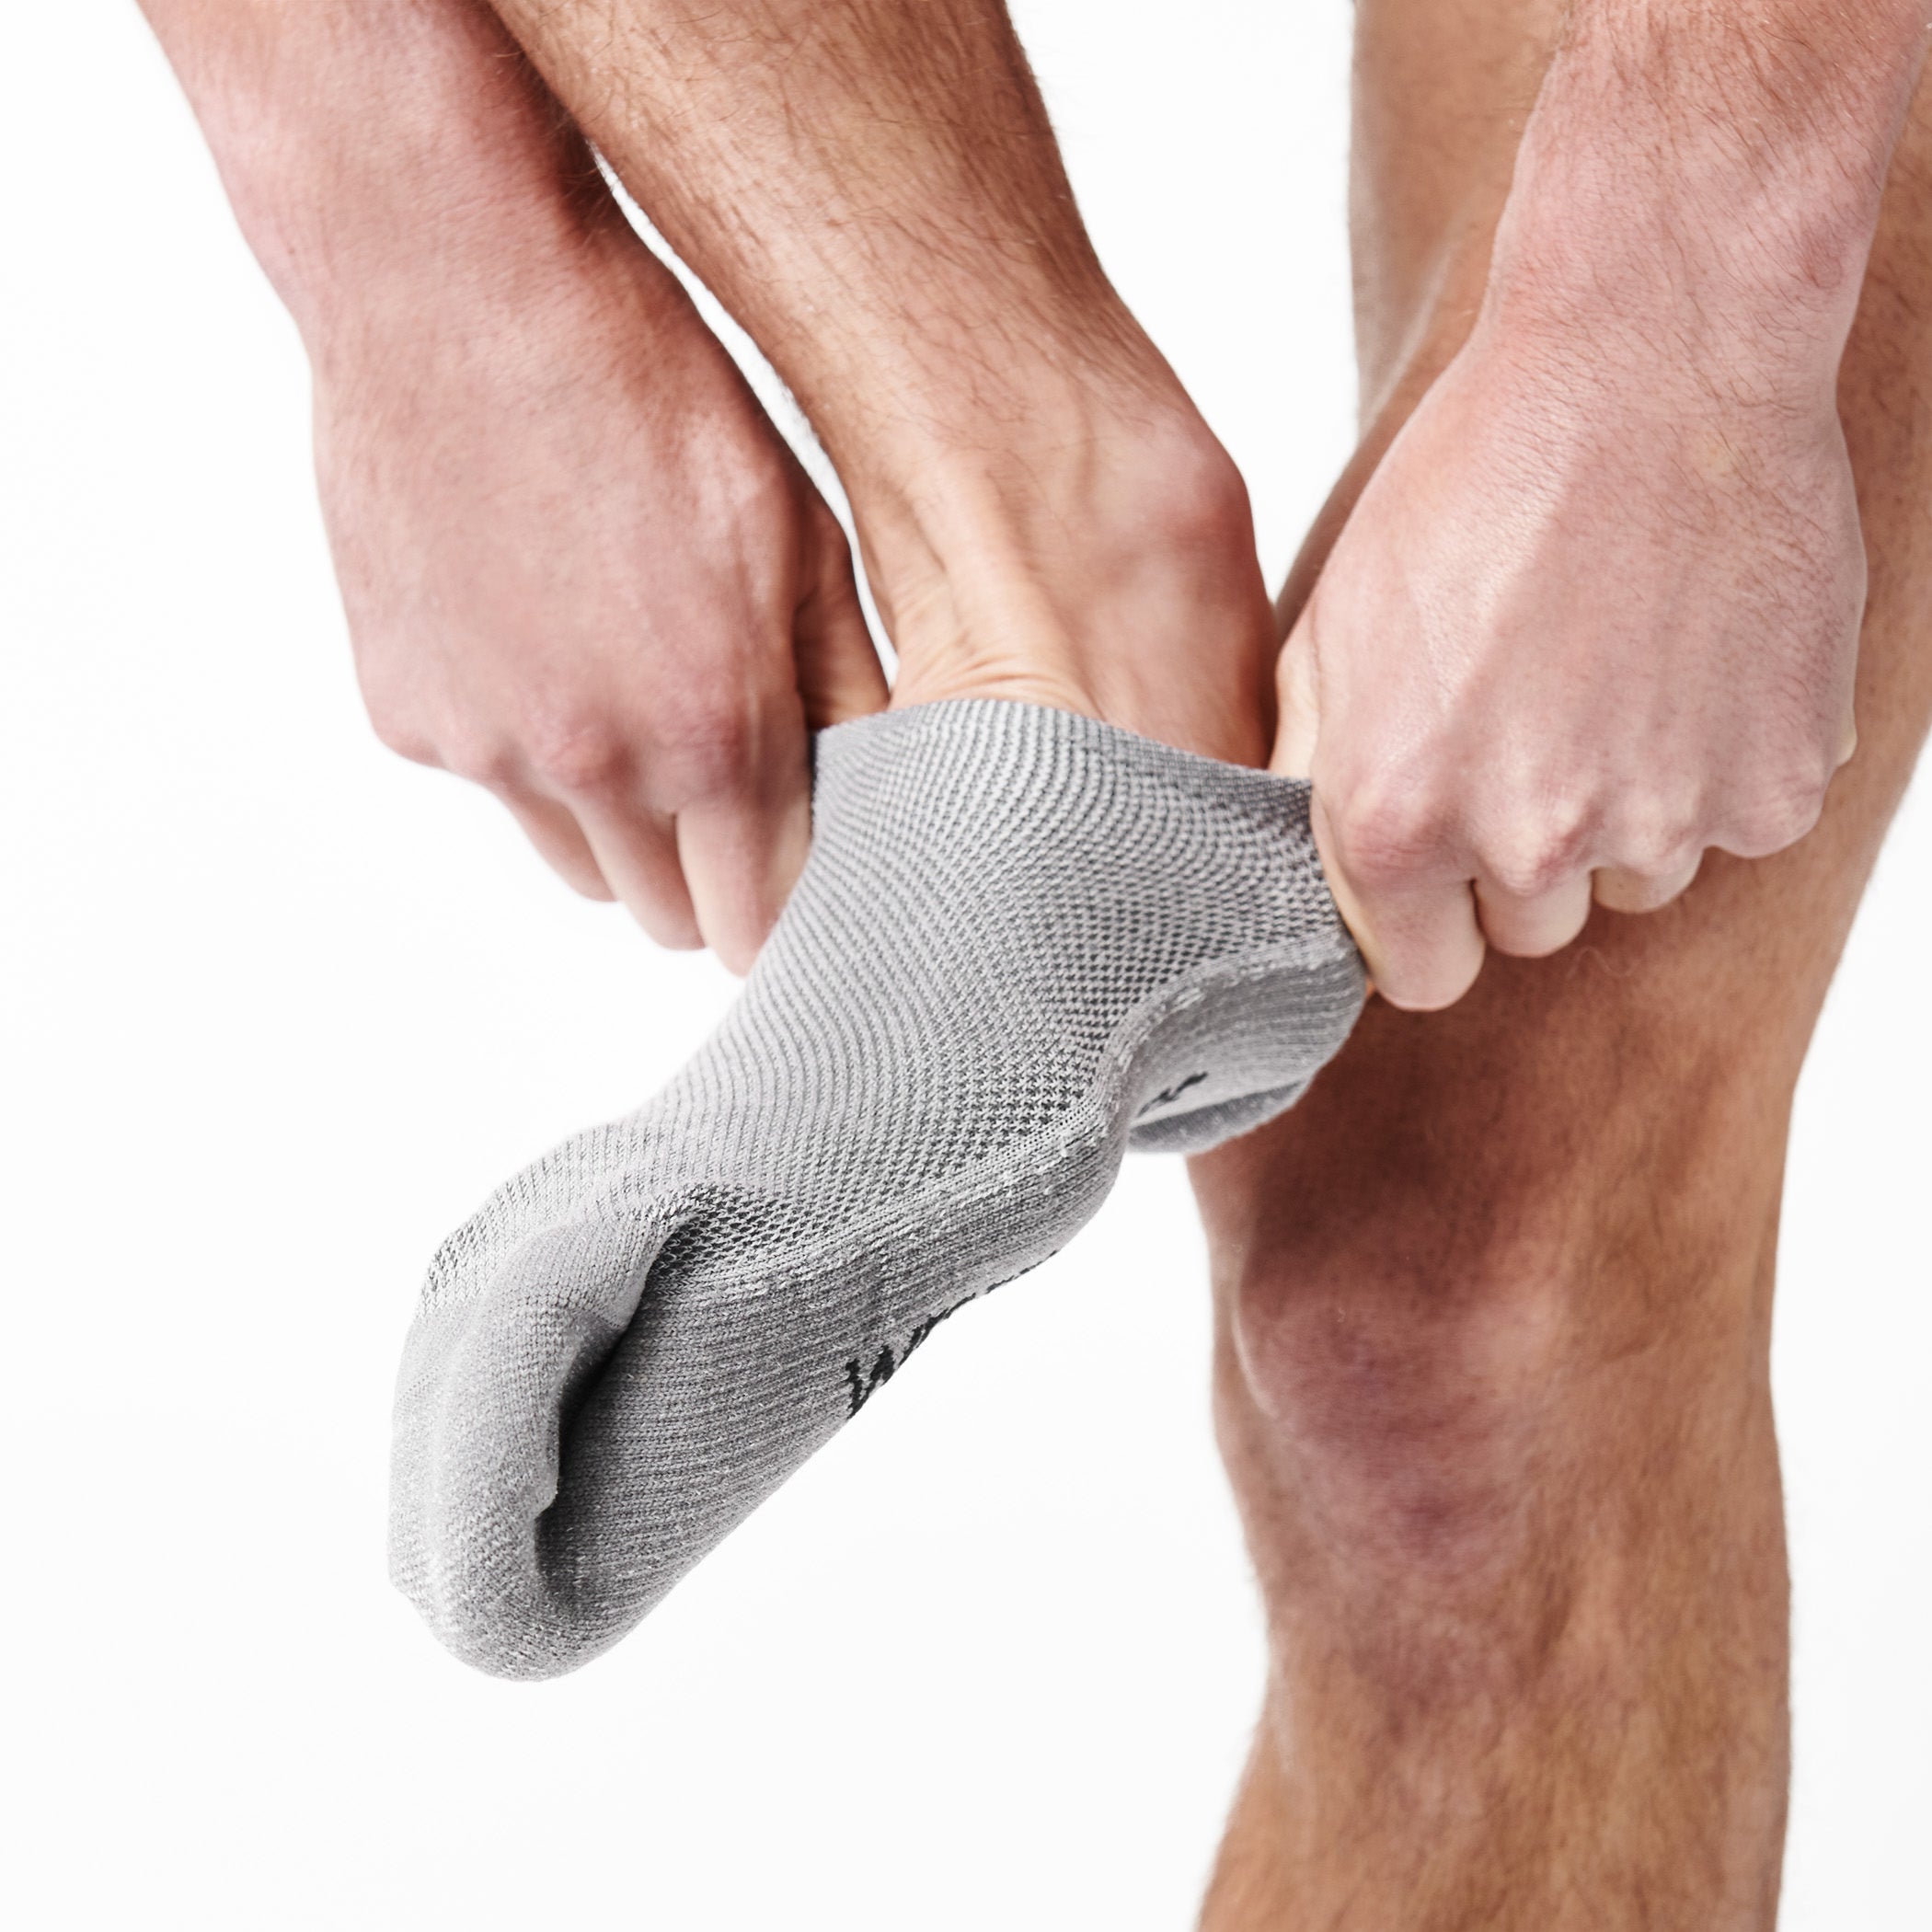 StrongCore Merino Socks - Low - Grey
